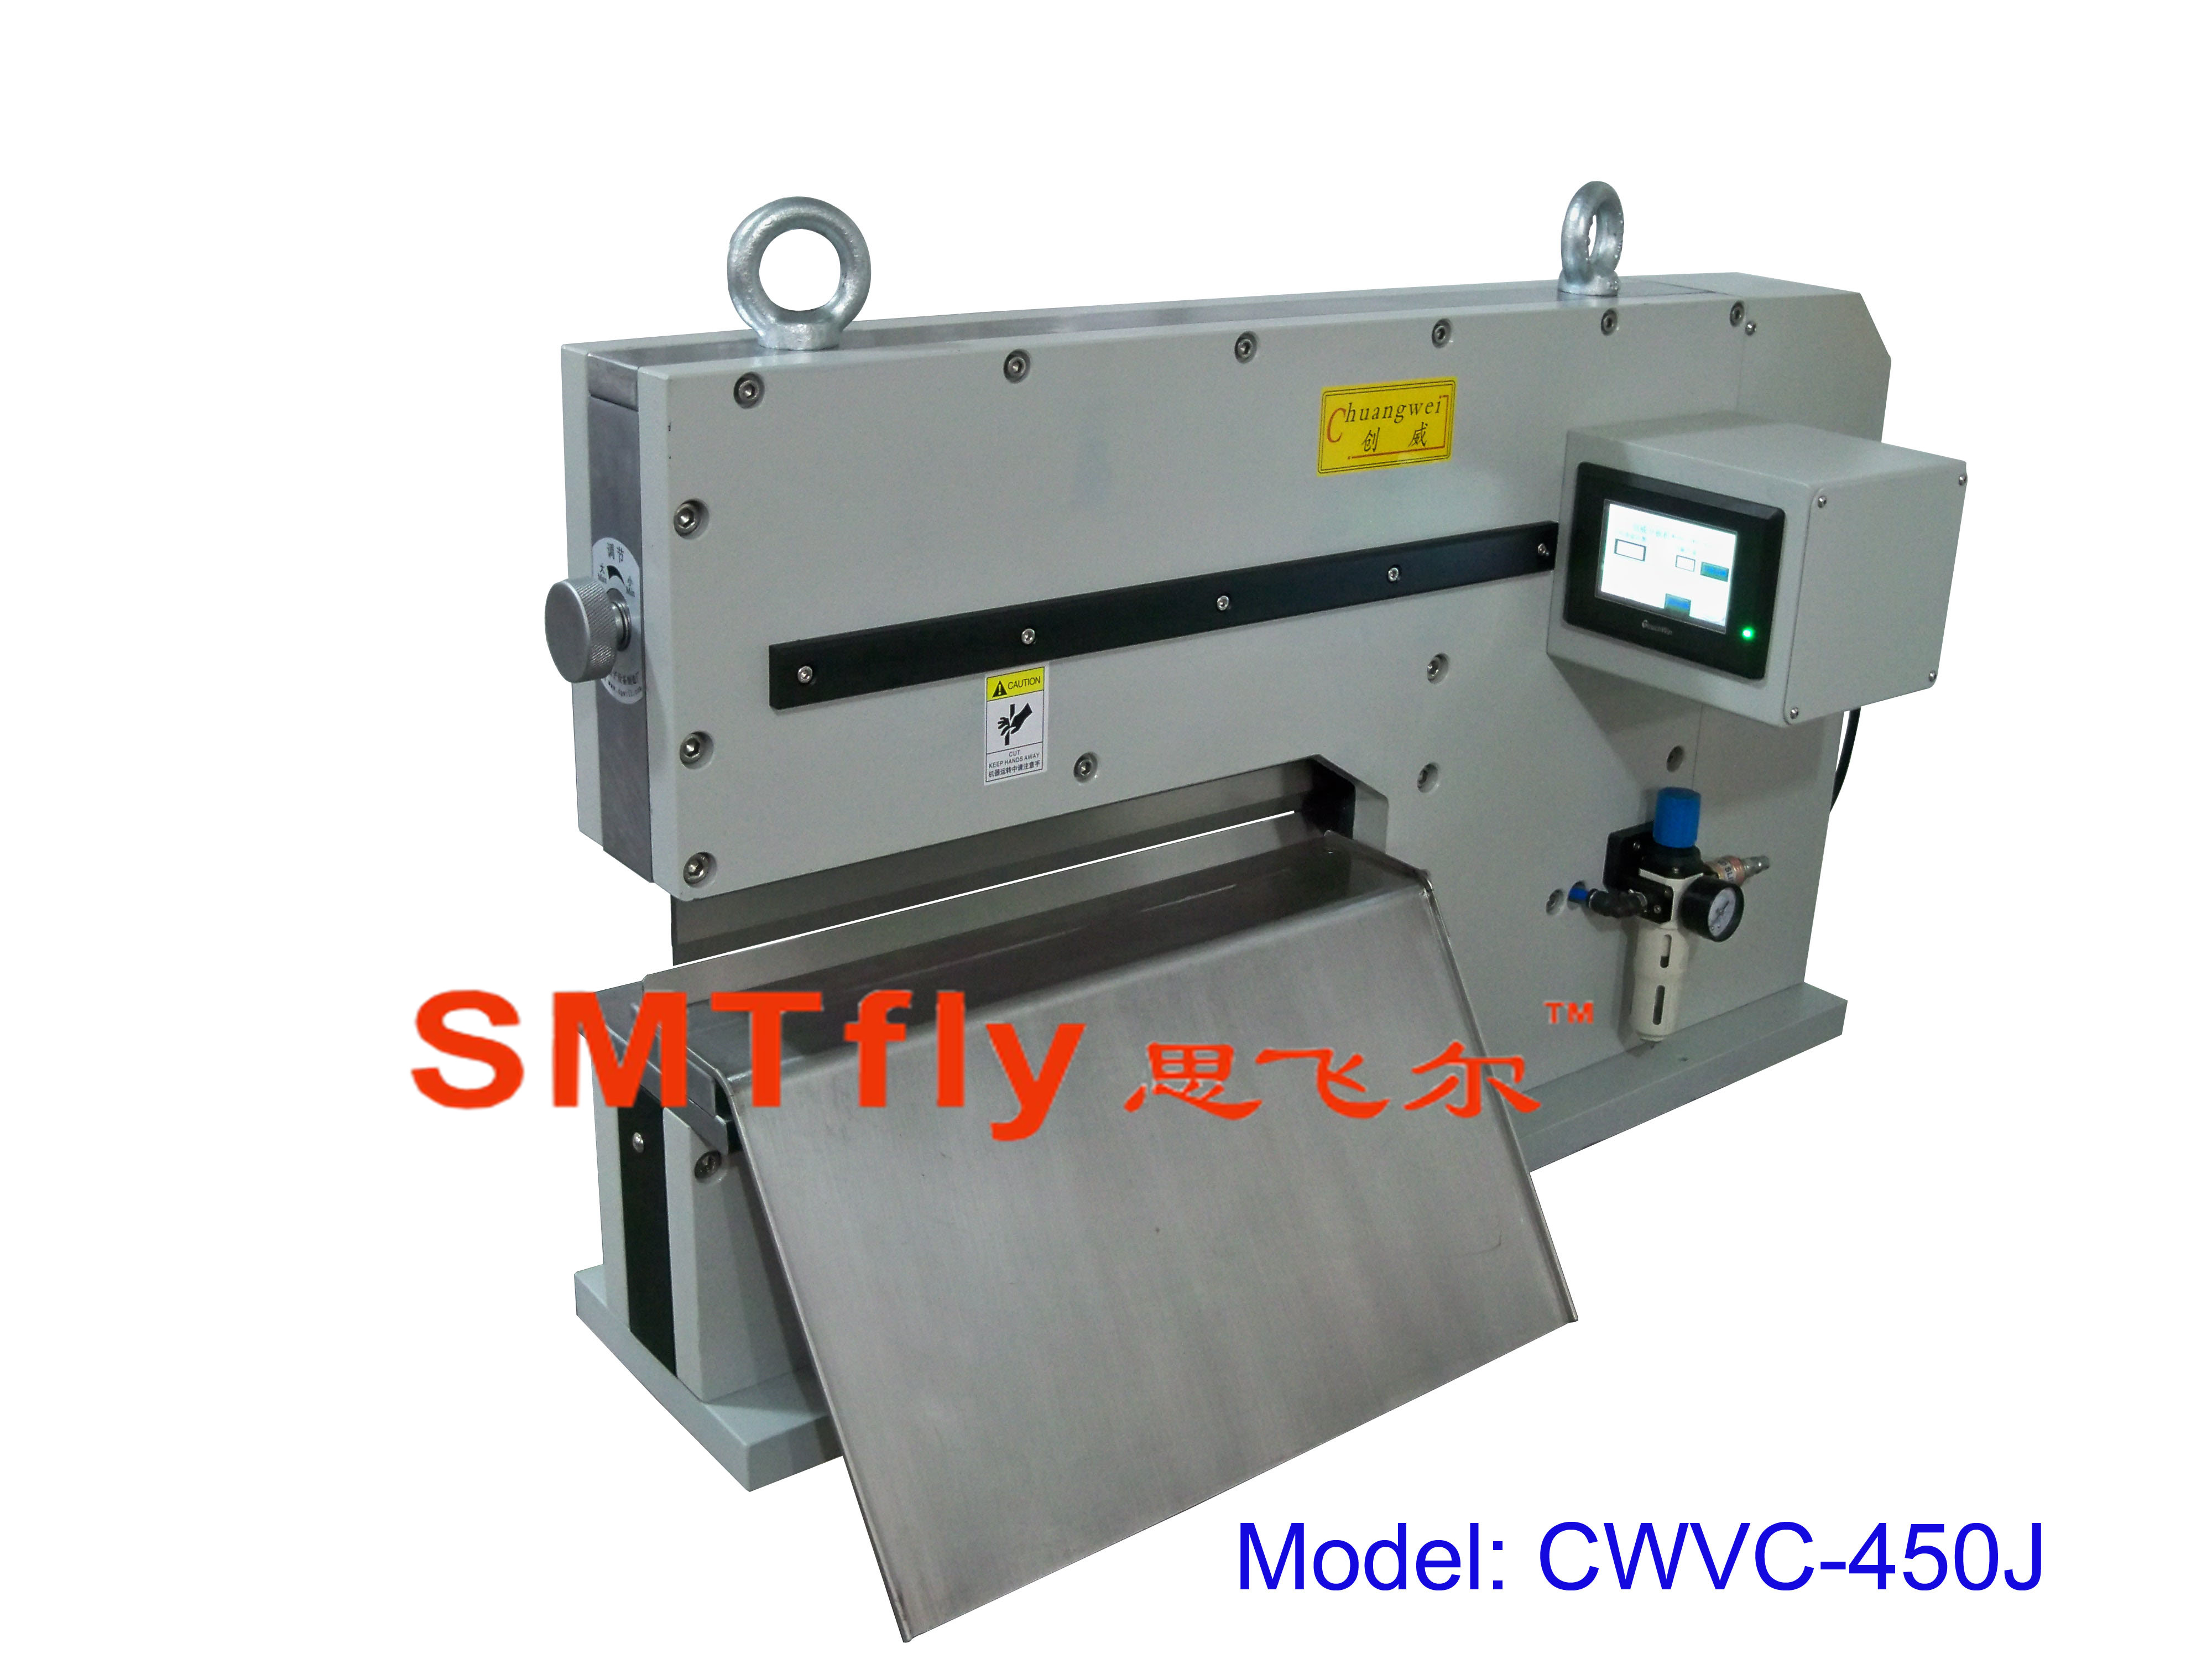 PCB Linear Cutting Equipment,SMTfly-450J